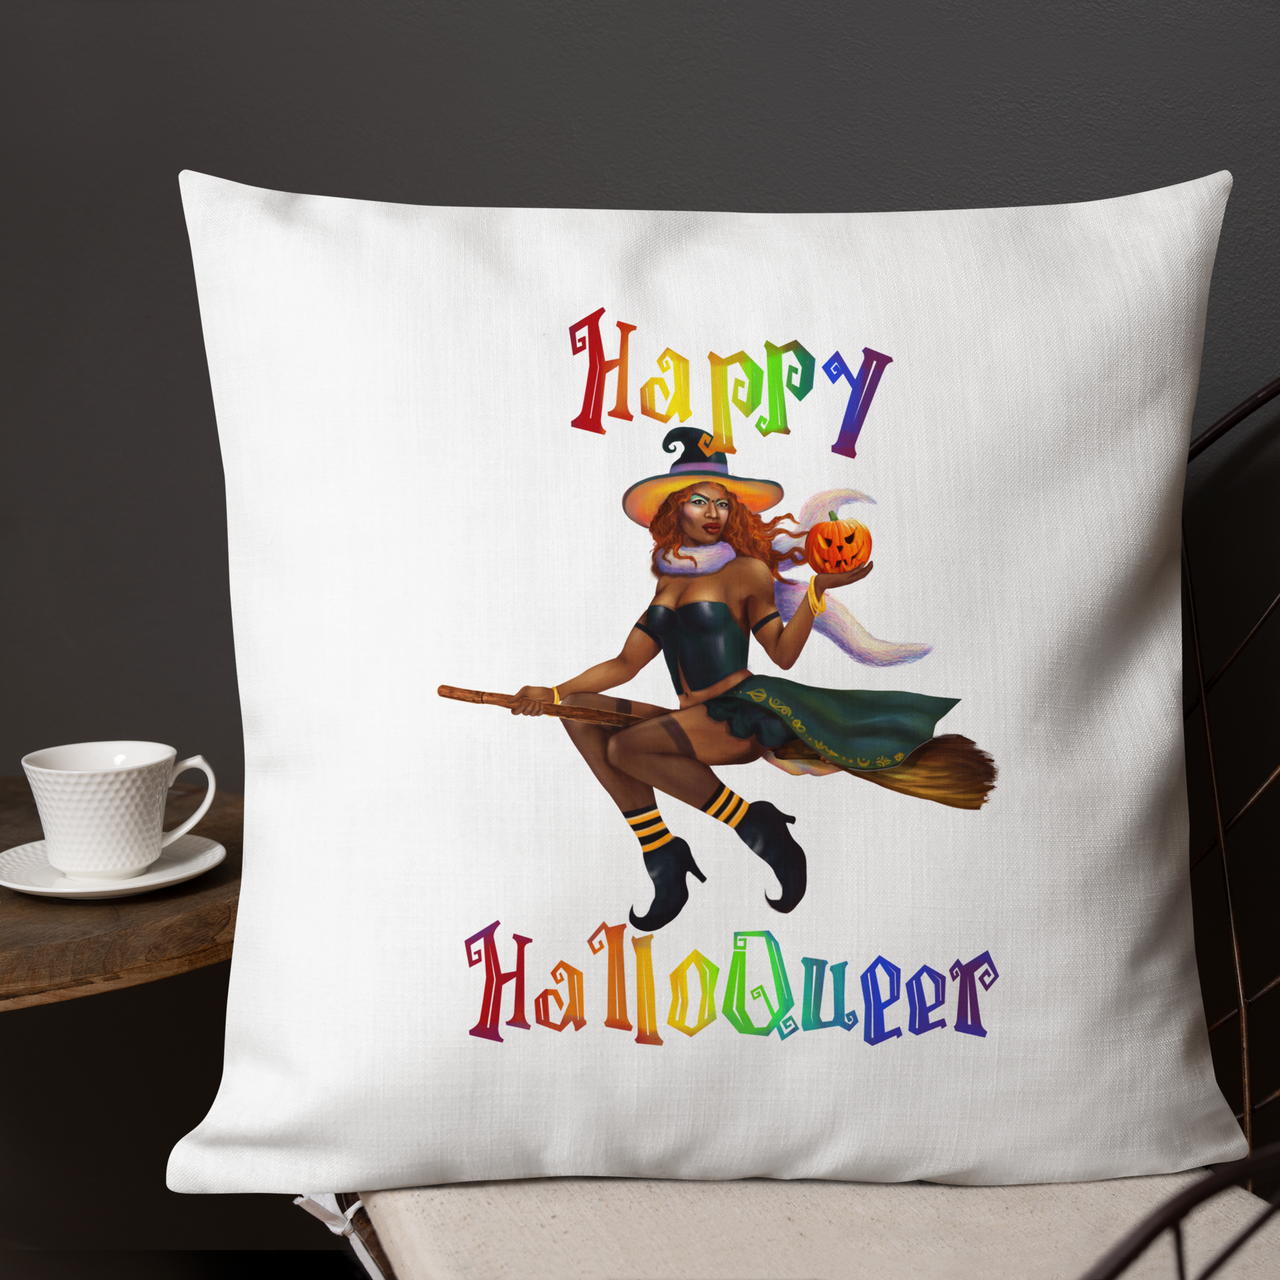 Transgender Halloween Premium Pillow-Trans Pride LGBT Halloween/Happy HalloQueer SHAVA